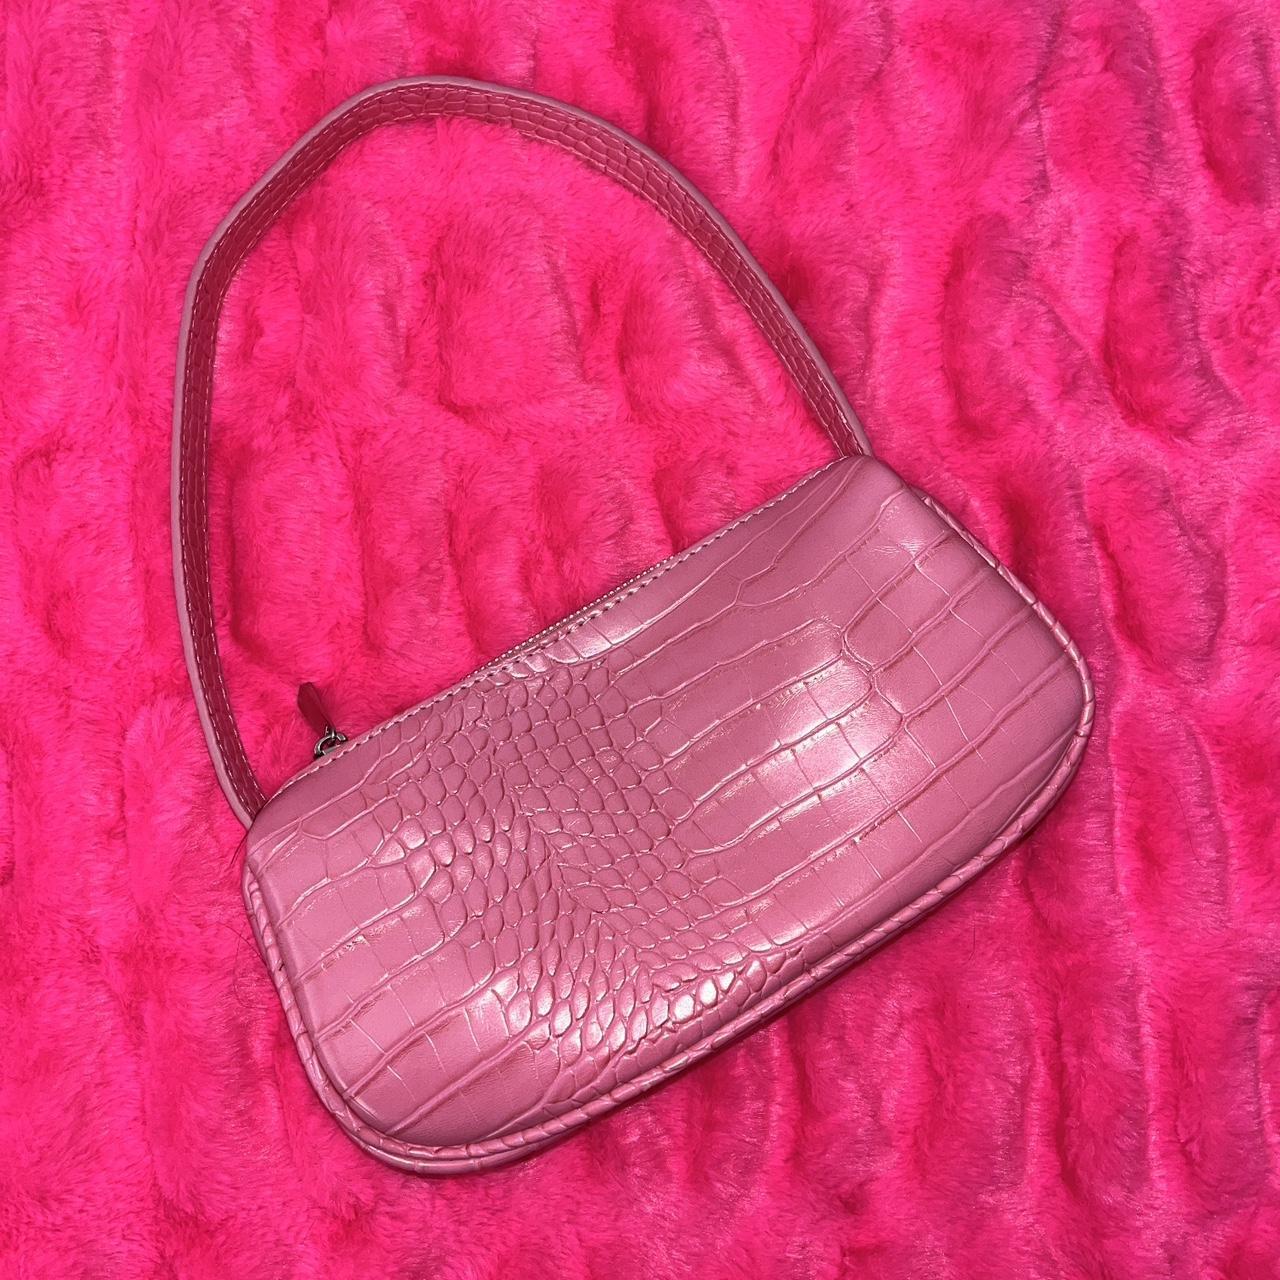 RAFE New York Handbag Small Pink Purple Leather Purse | eBay